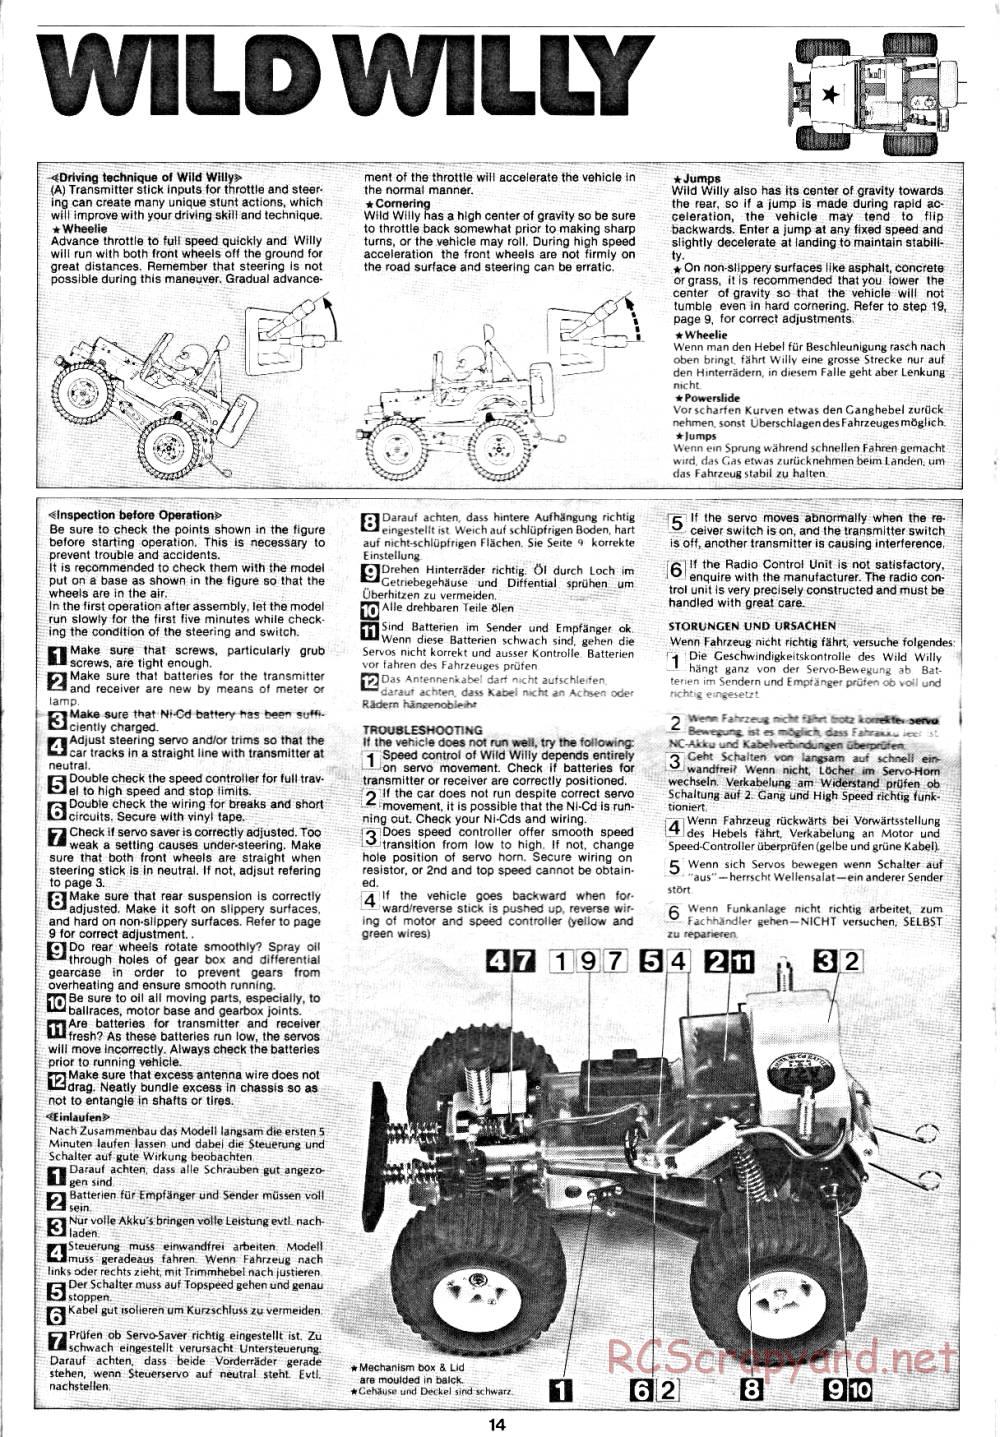 Tamiya - Wild Willy, Willys M38 - 58035 - Manual - Page 14